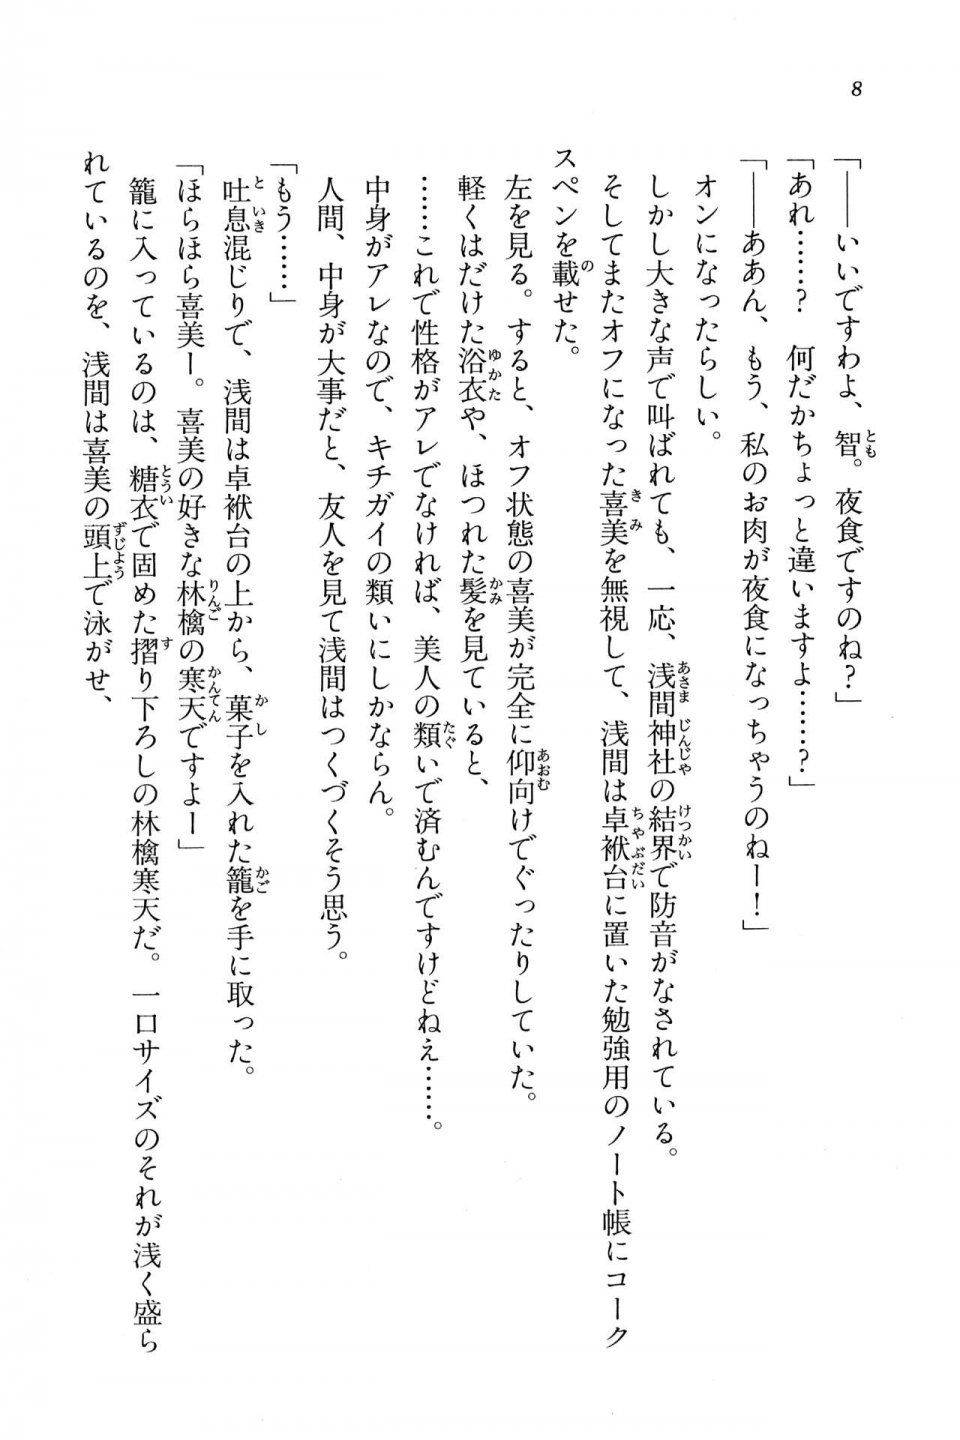 Kyoukai Senjou no Horizon BD Special Mininovel Vol 7(4A) - Photo #12